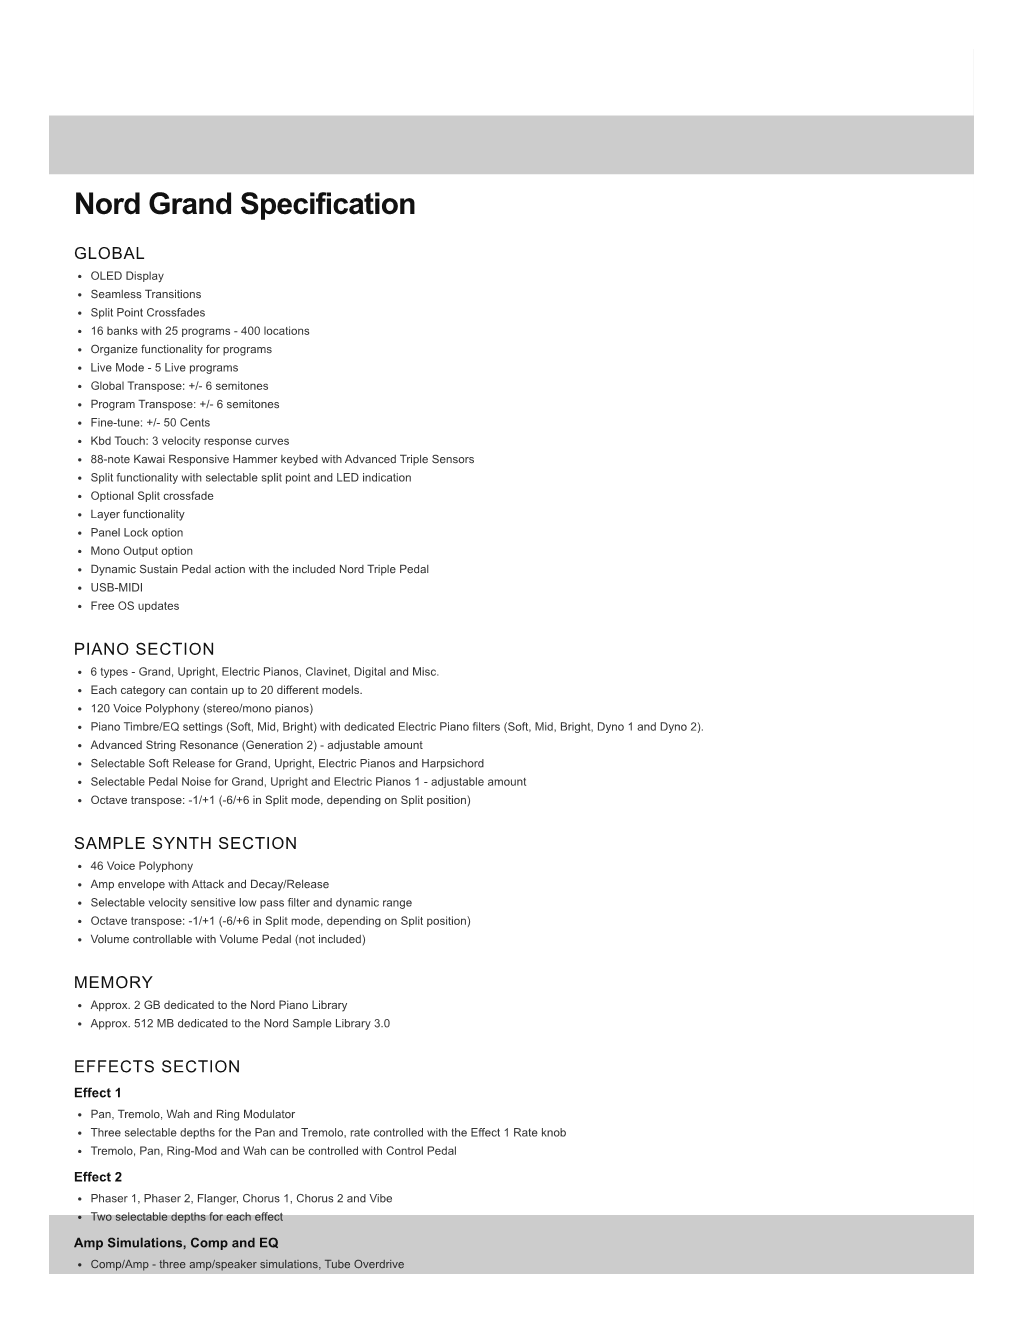 Nord Grand Spec Sheet